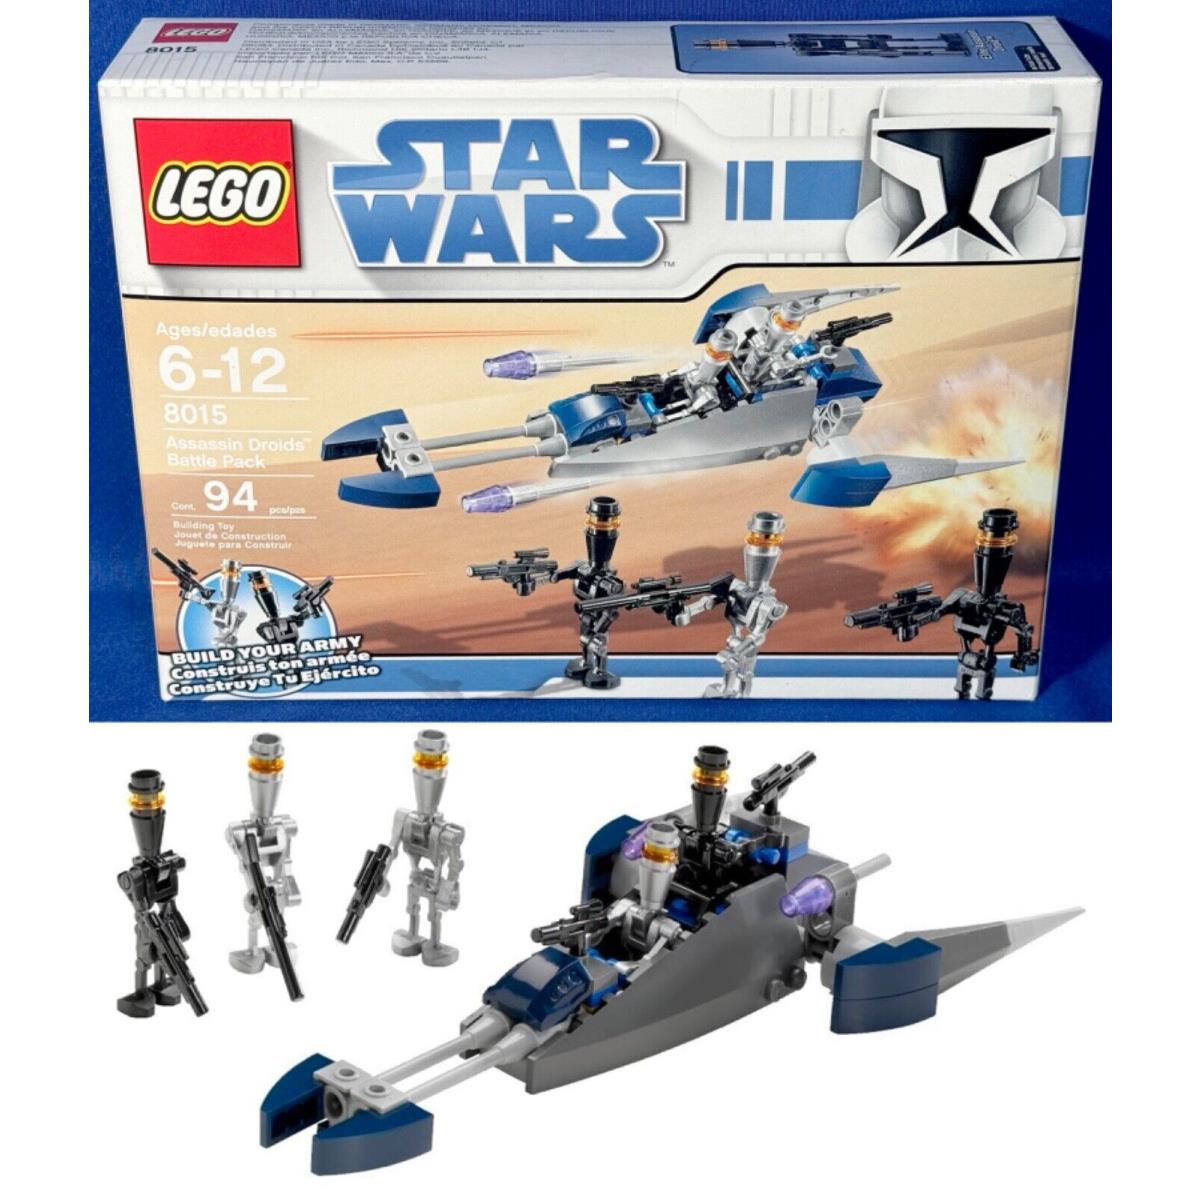 Assassin Droids Battle Pack Lego 8015 Star Wars Speeder 5 Minifigures 2 Elite